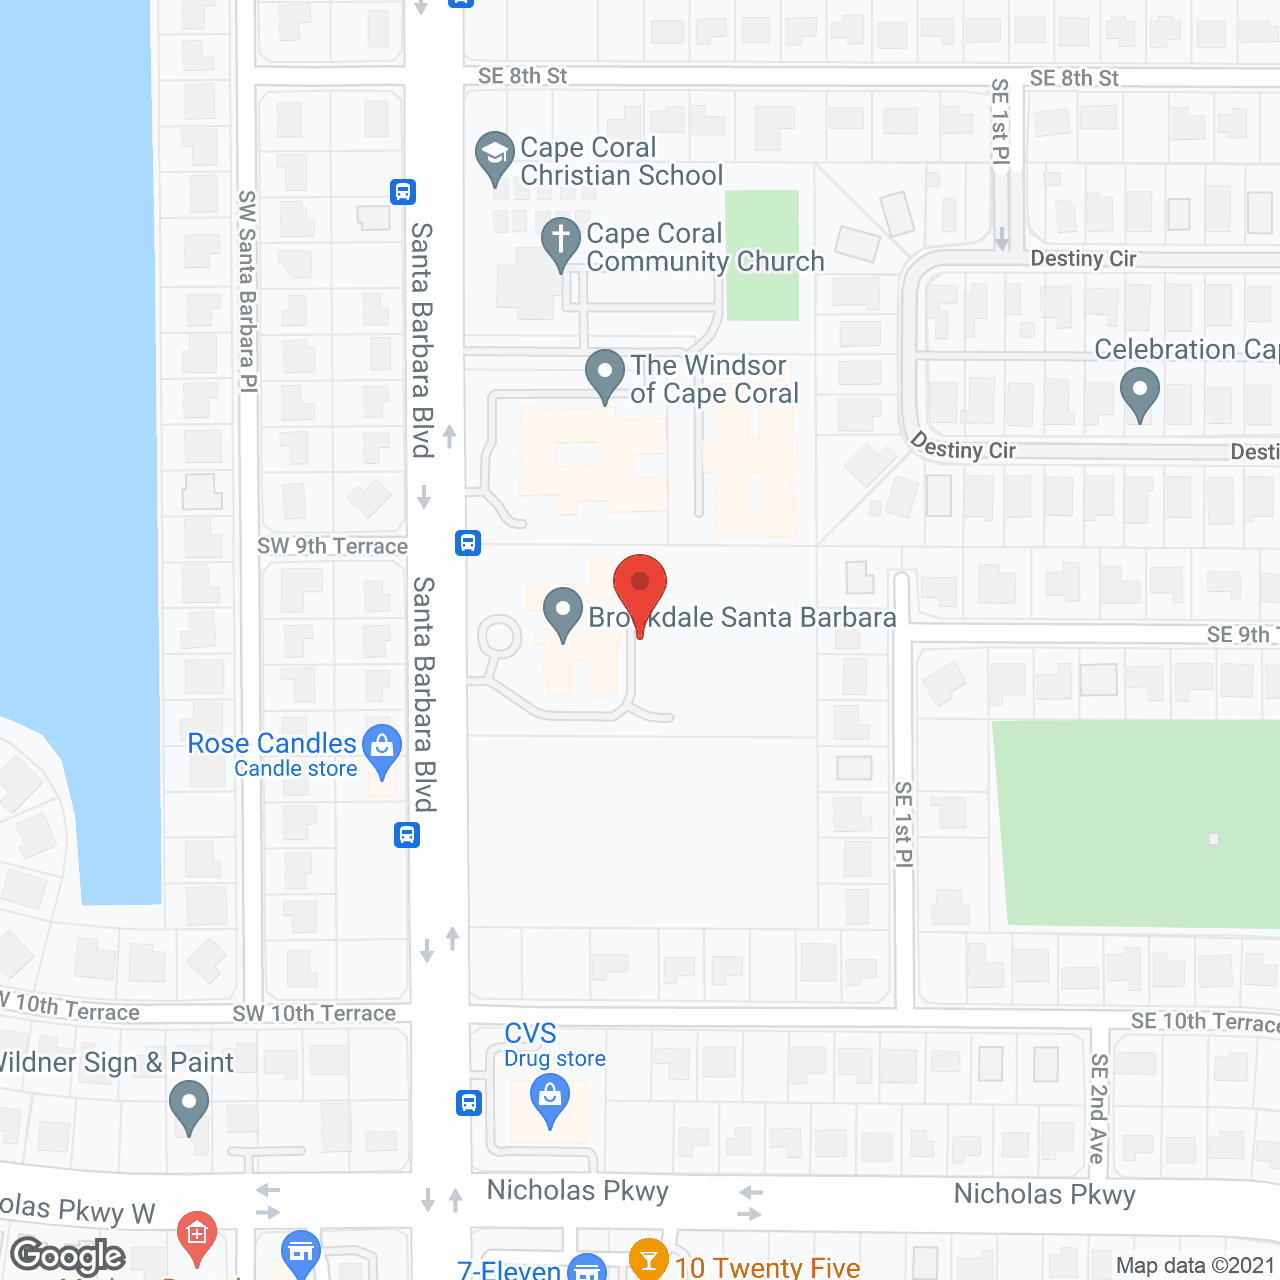 Brookdale Santa Barbara in google map